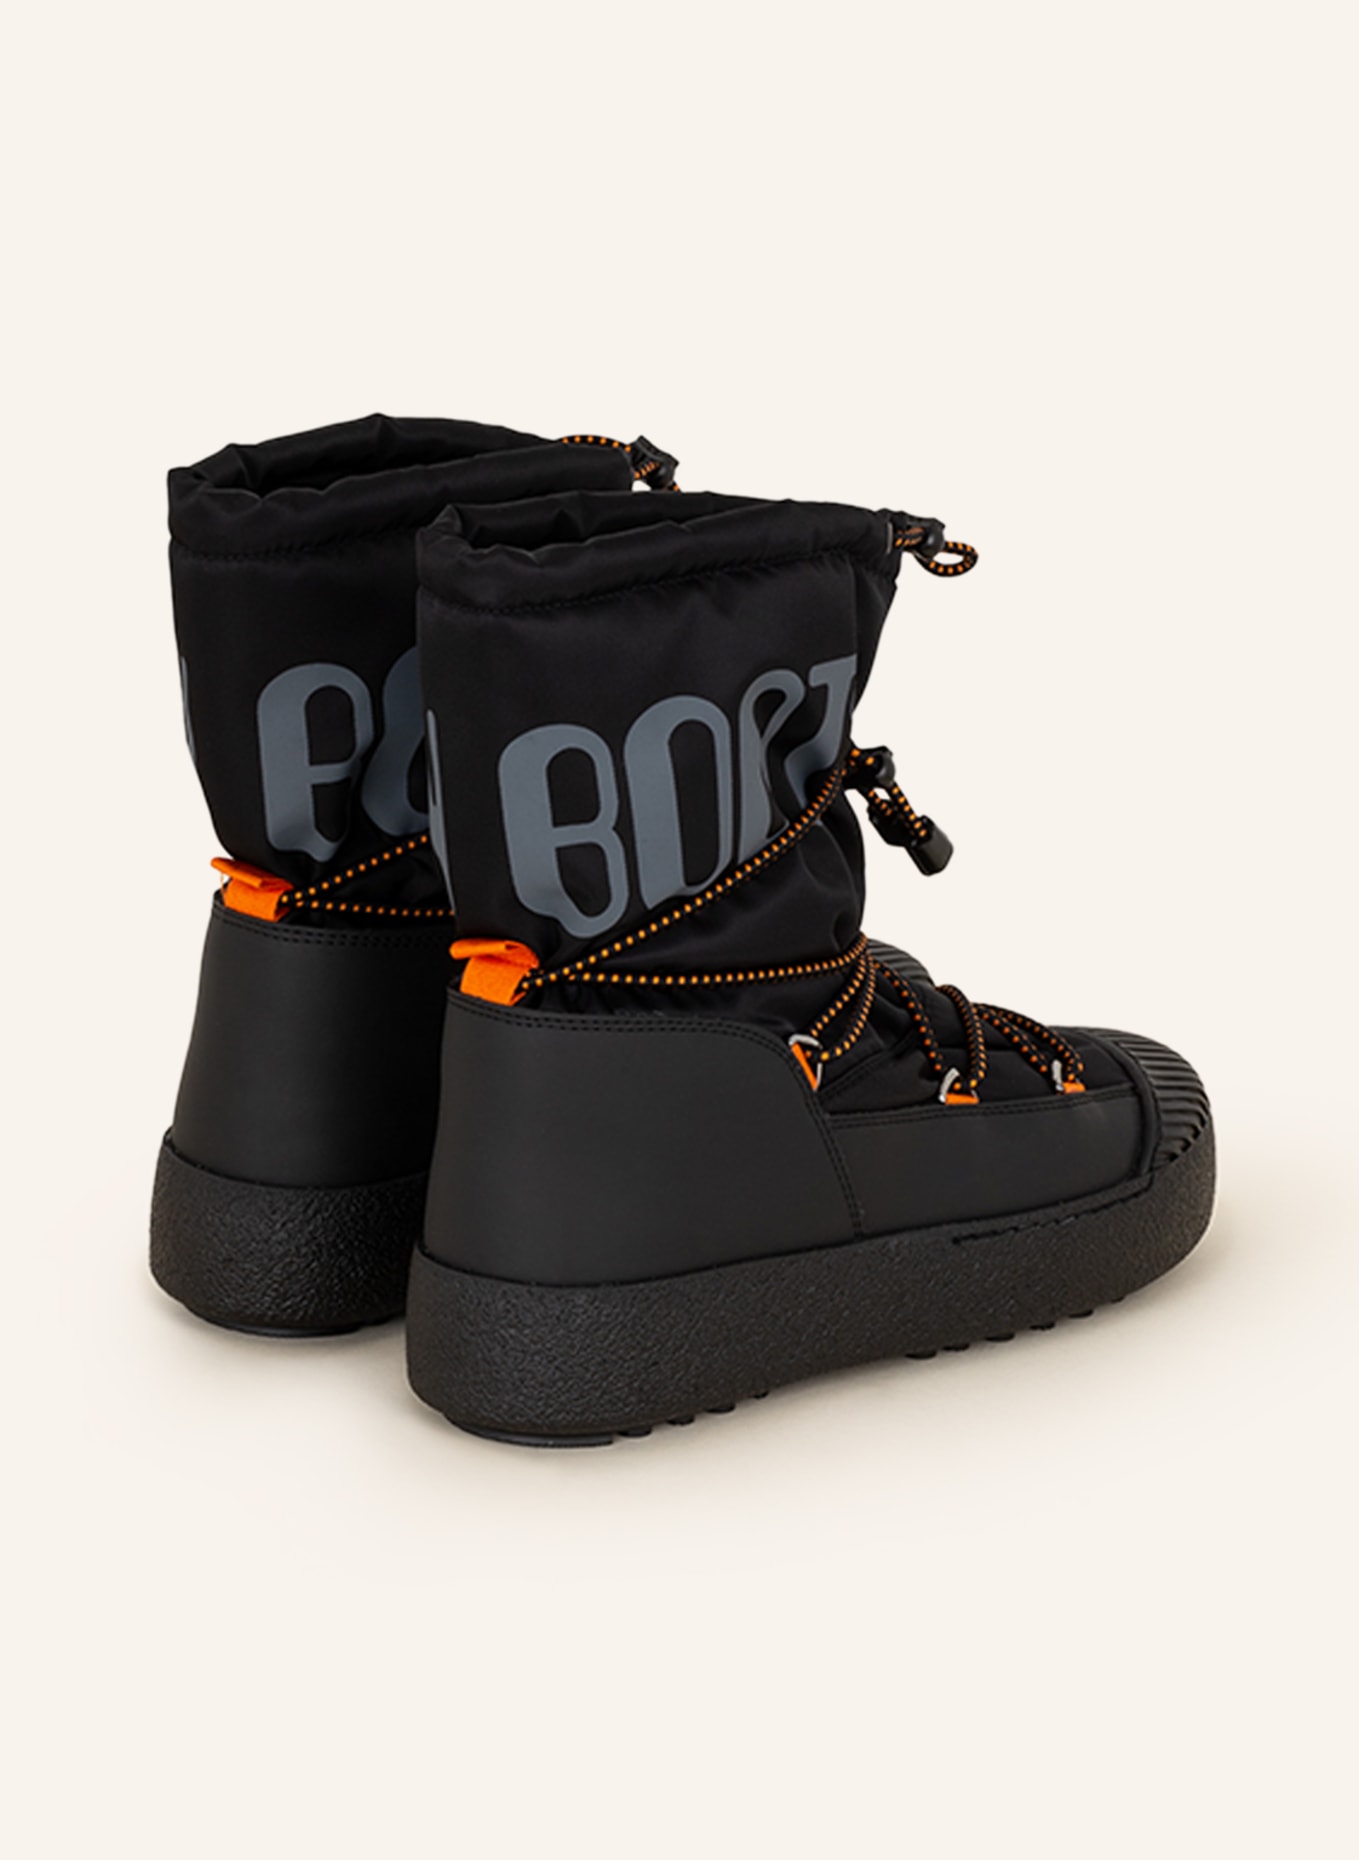 Moon Boot MTRACK POLAR - Bottes de neige - black/orange/noir - ZALANDO.CH